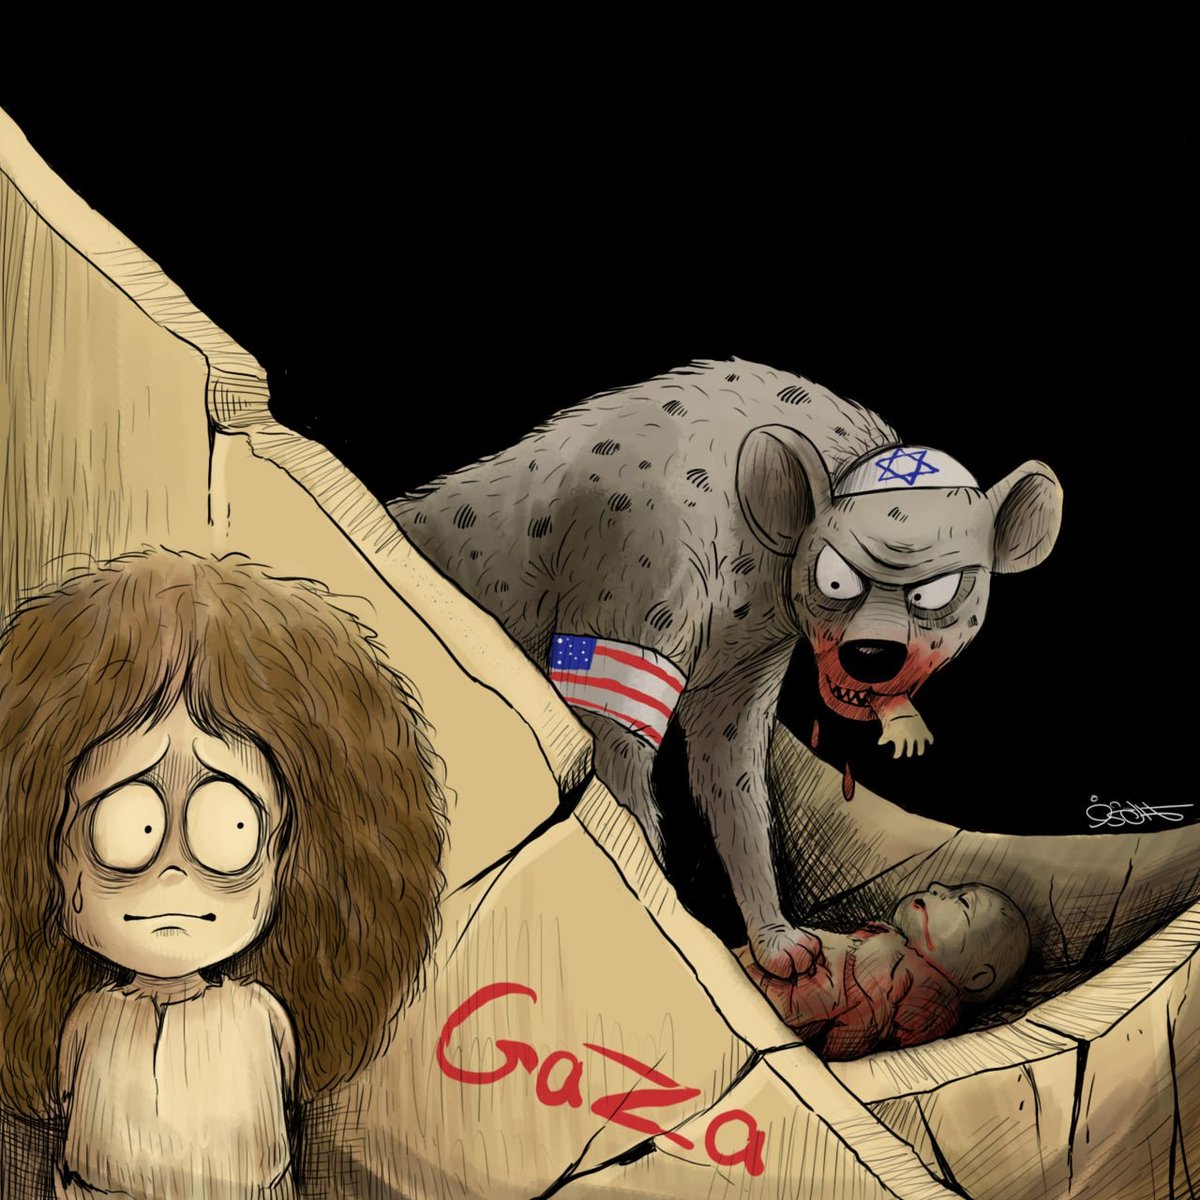 The self-determination of Zionism in Gaza